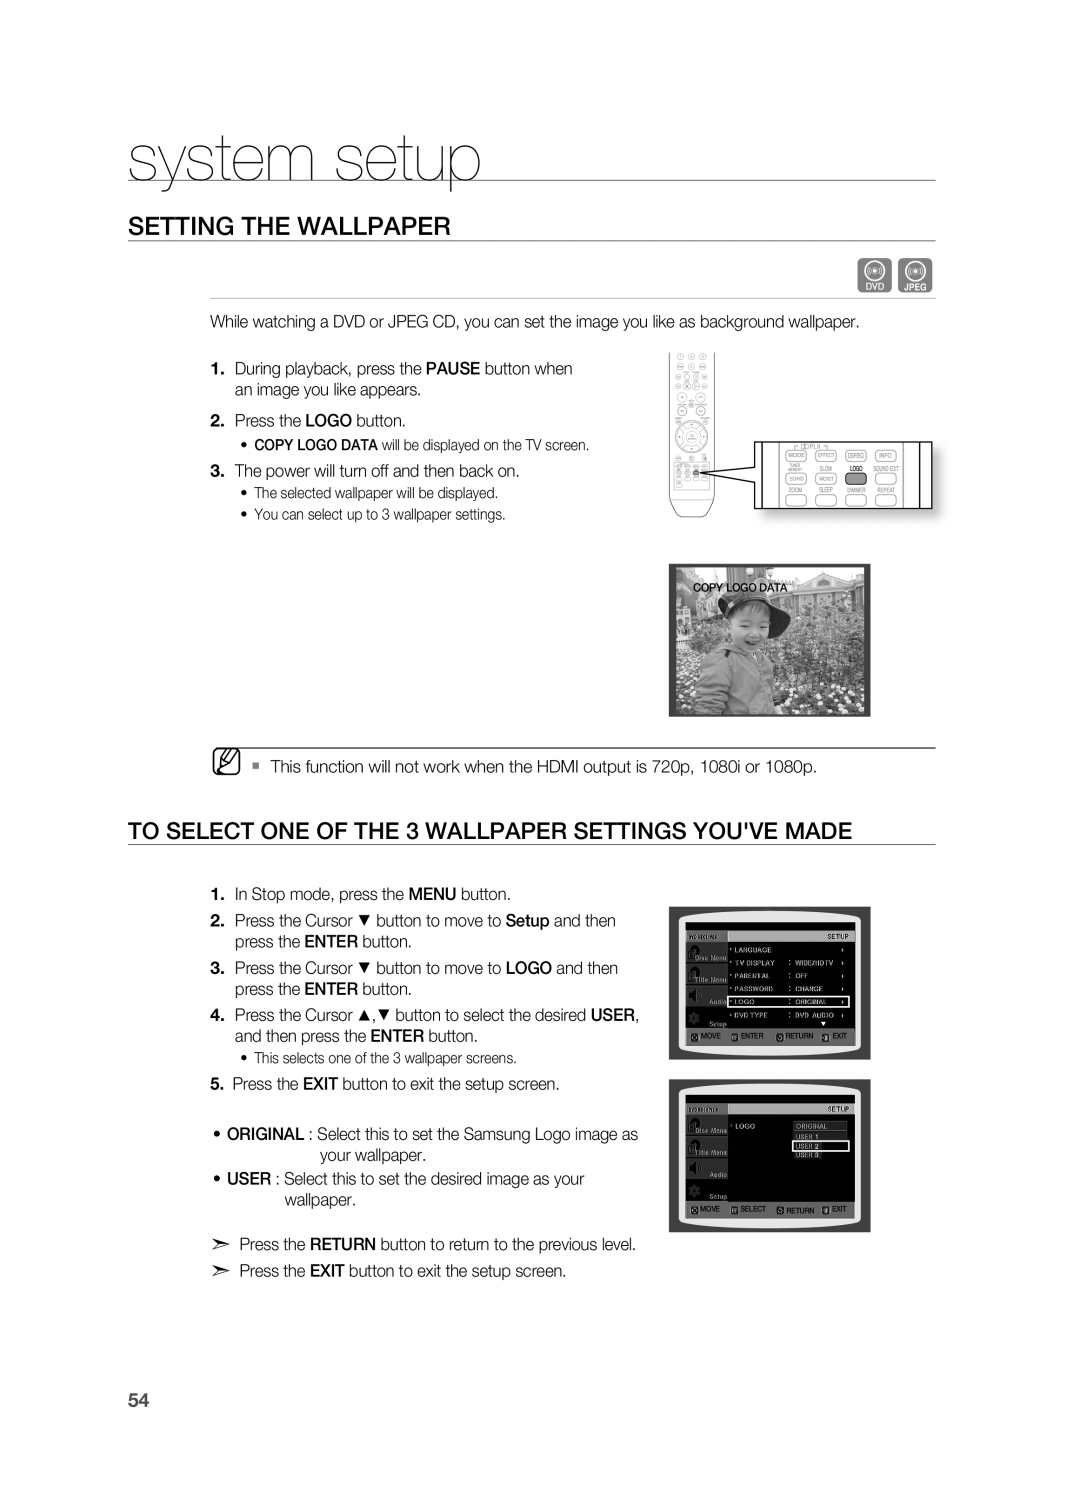 Samsung HT-TZ312 manual SEttinG tHE WaLLPaPEr, system setup 